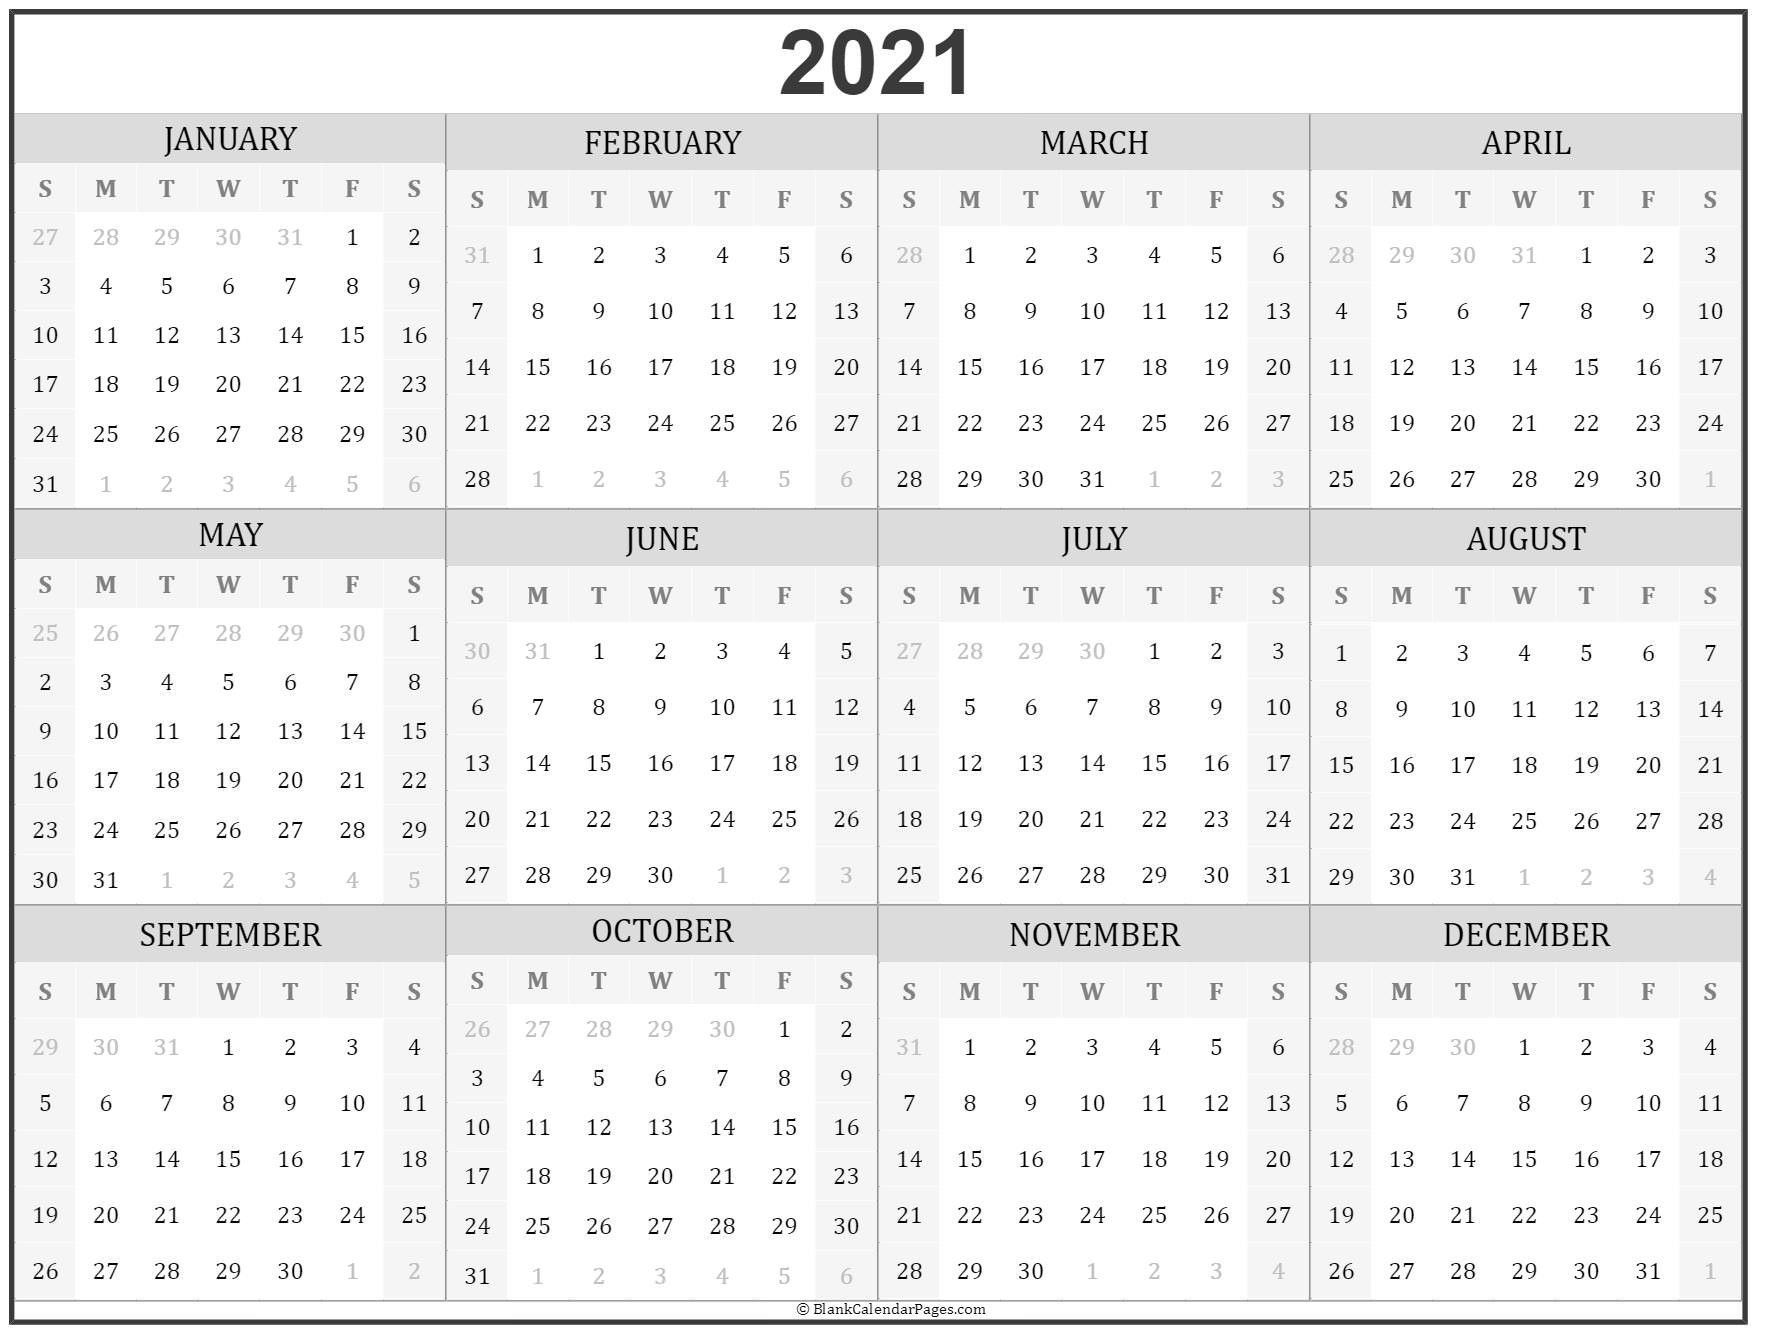 2021 Calendar - Free Download Printable Calendar Templates